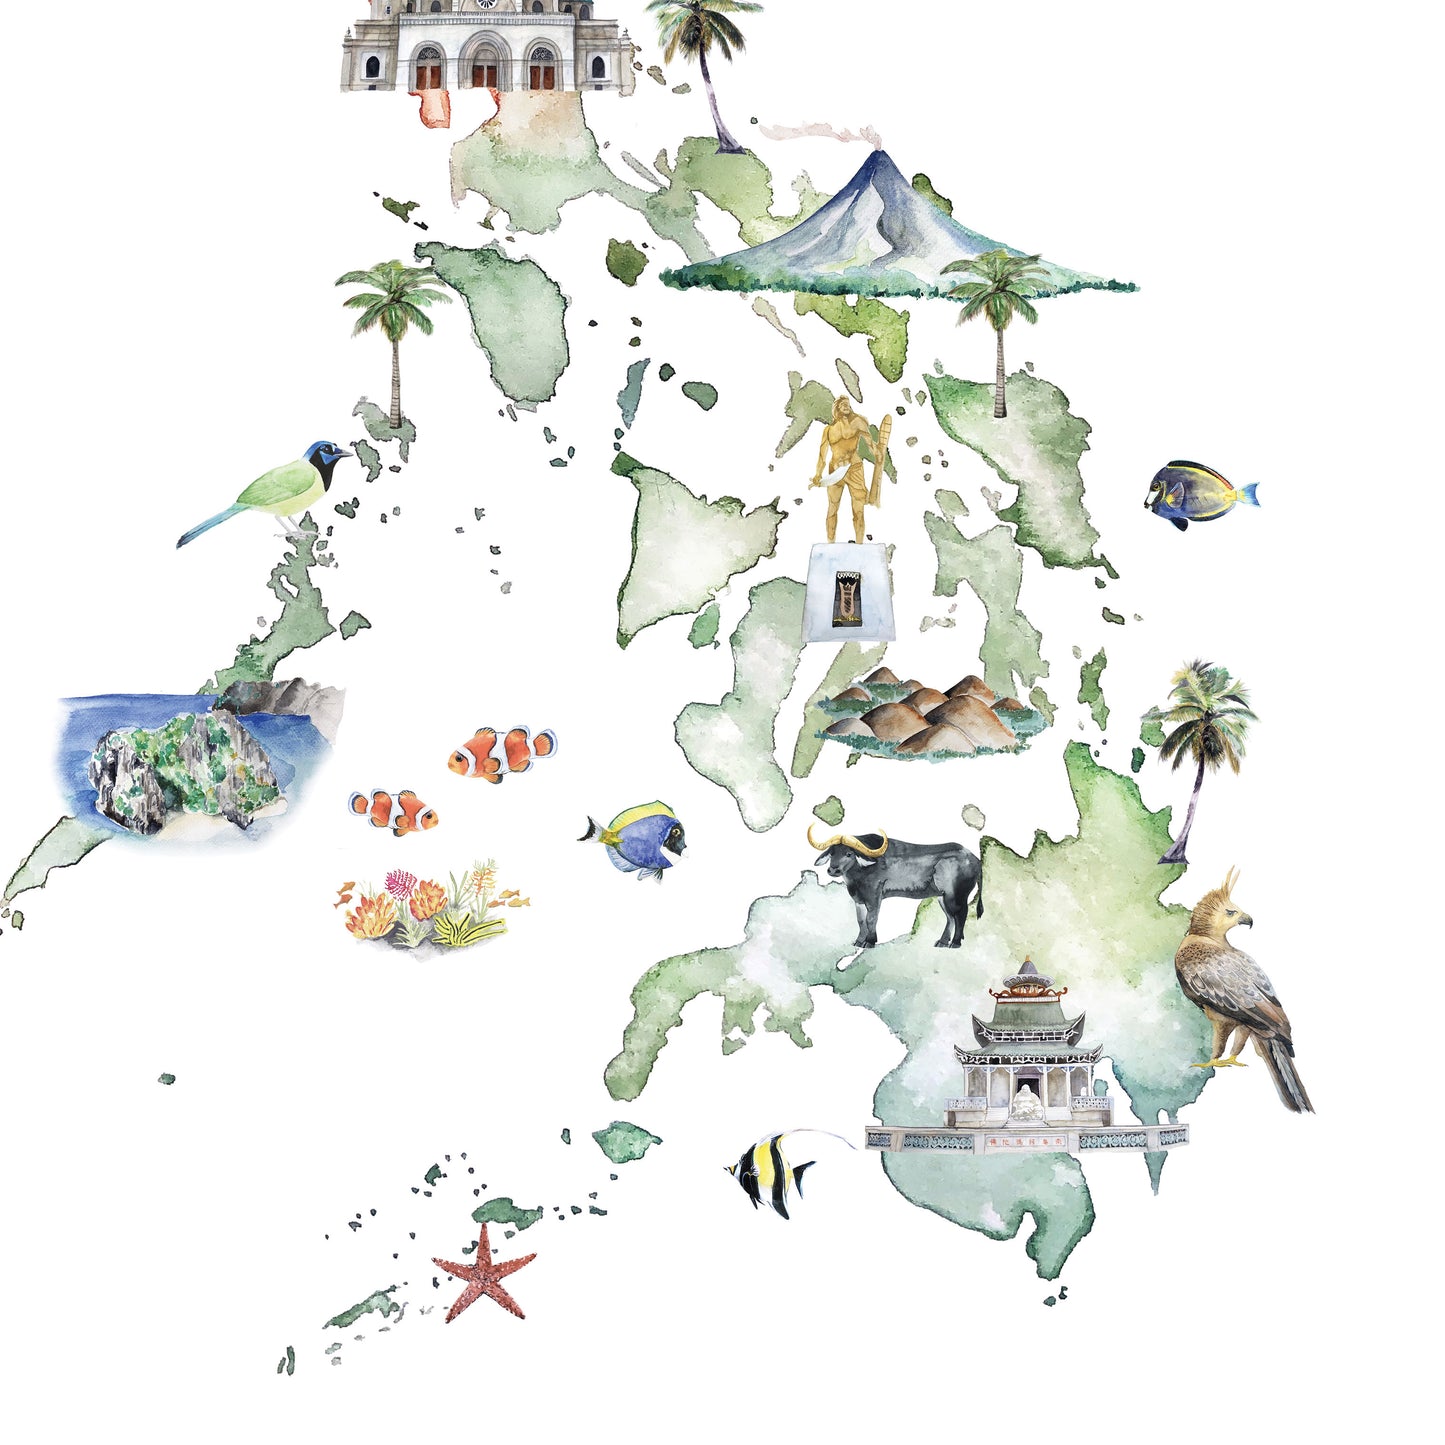 Philippines Illustrated Map Art Print